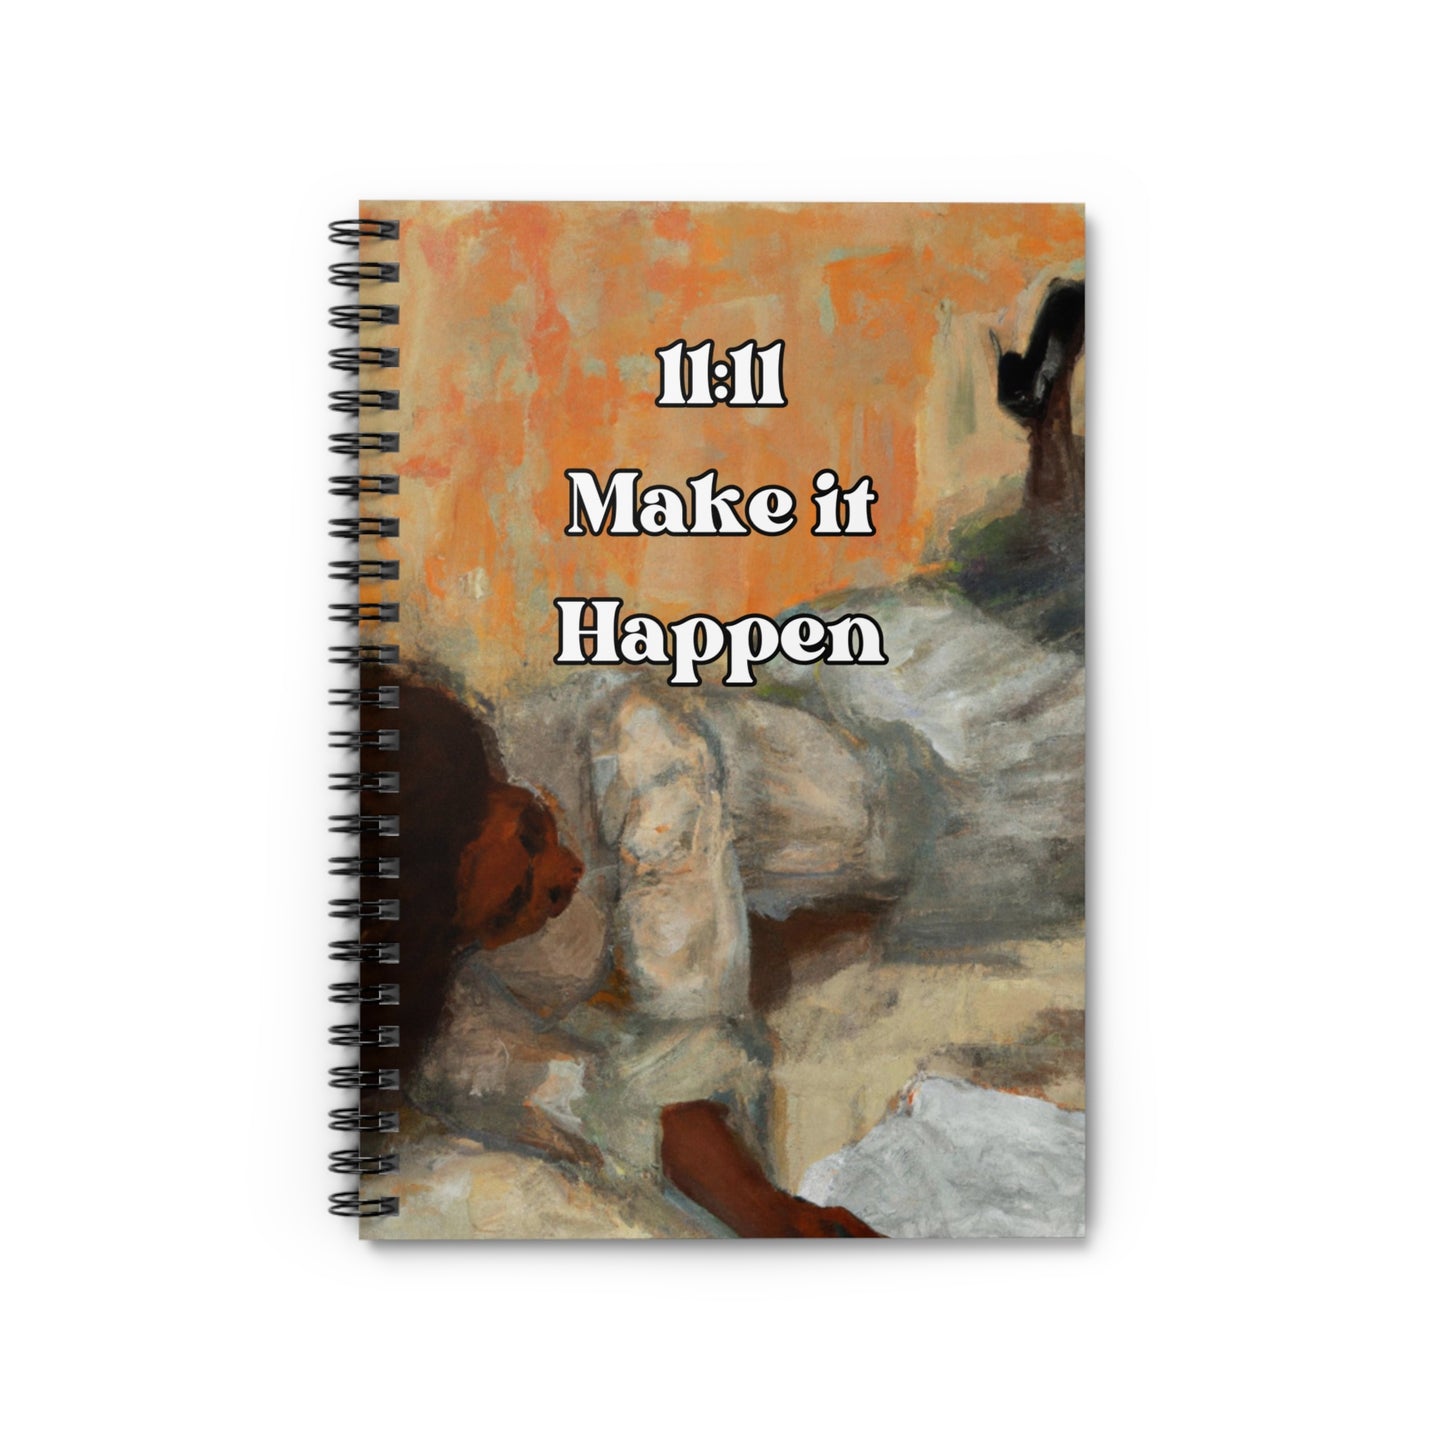 11 Eleven Make it Happen - Ruled Line Notebook